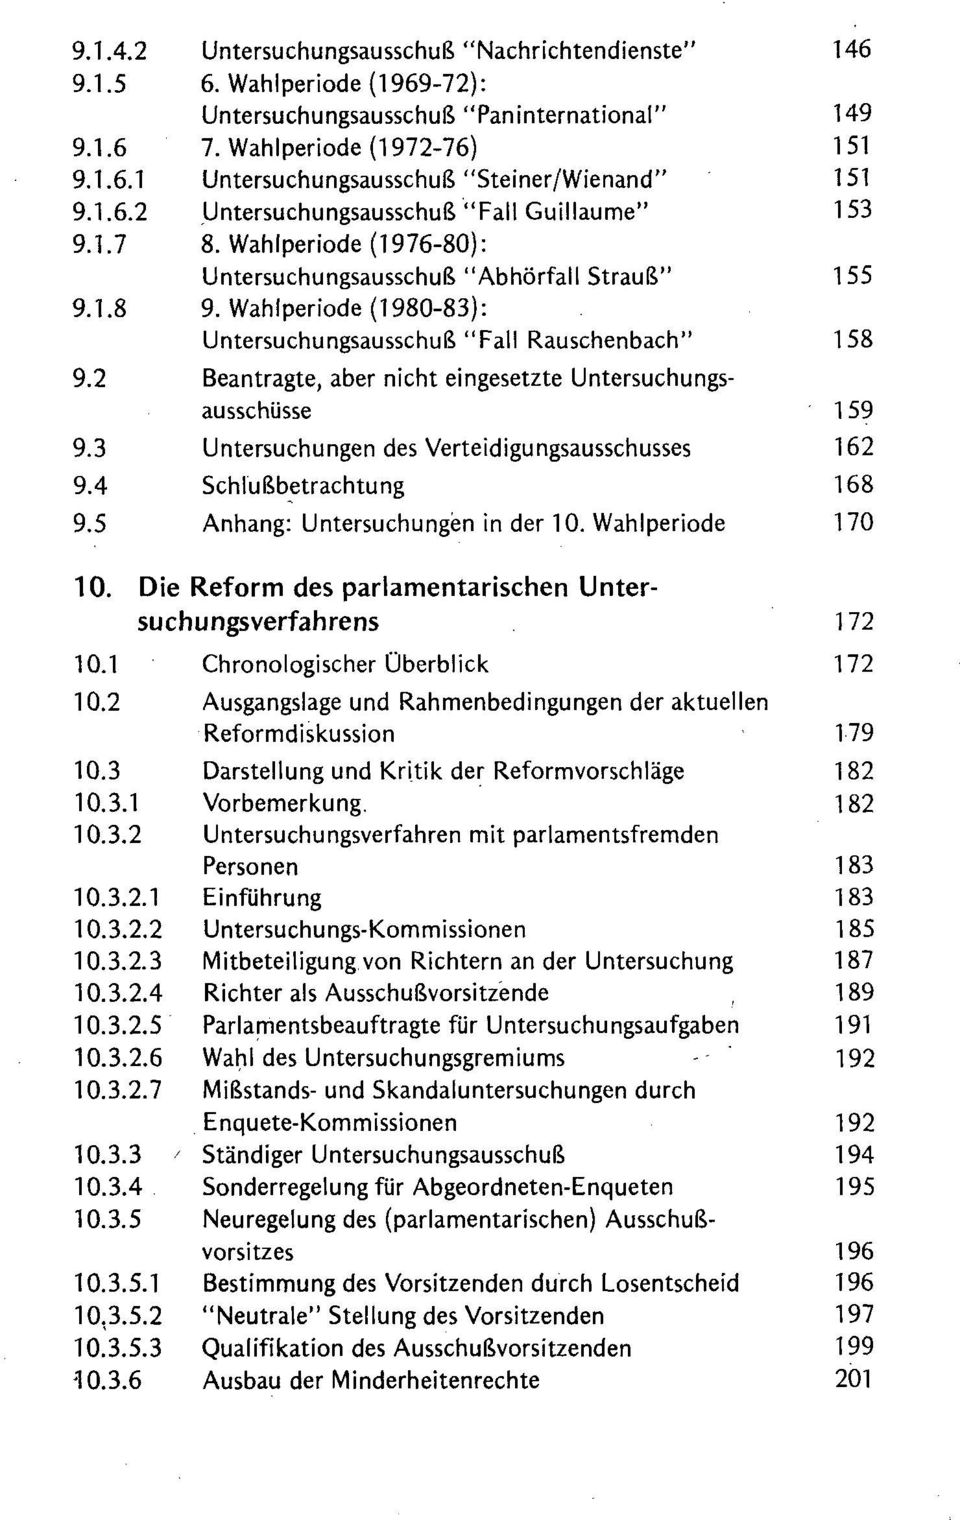 Wahlperiode (1980-83): Untersuchungsausschuß "Fall Rauschenbach" 158 9.2 Beantragte, aber nicht eingesetzte Untersuchungsausschüsse 159 9.3 Untersuchungen des Verteidigungsausschusses 162 9.